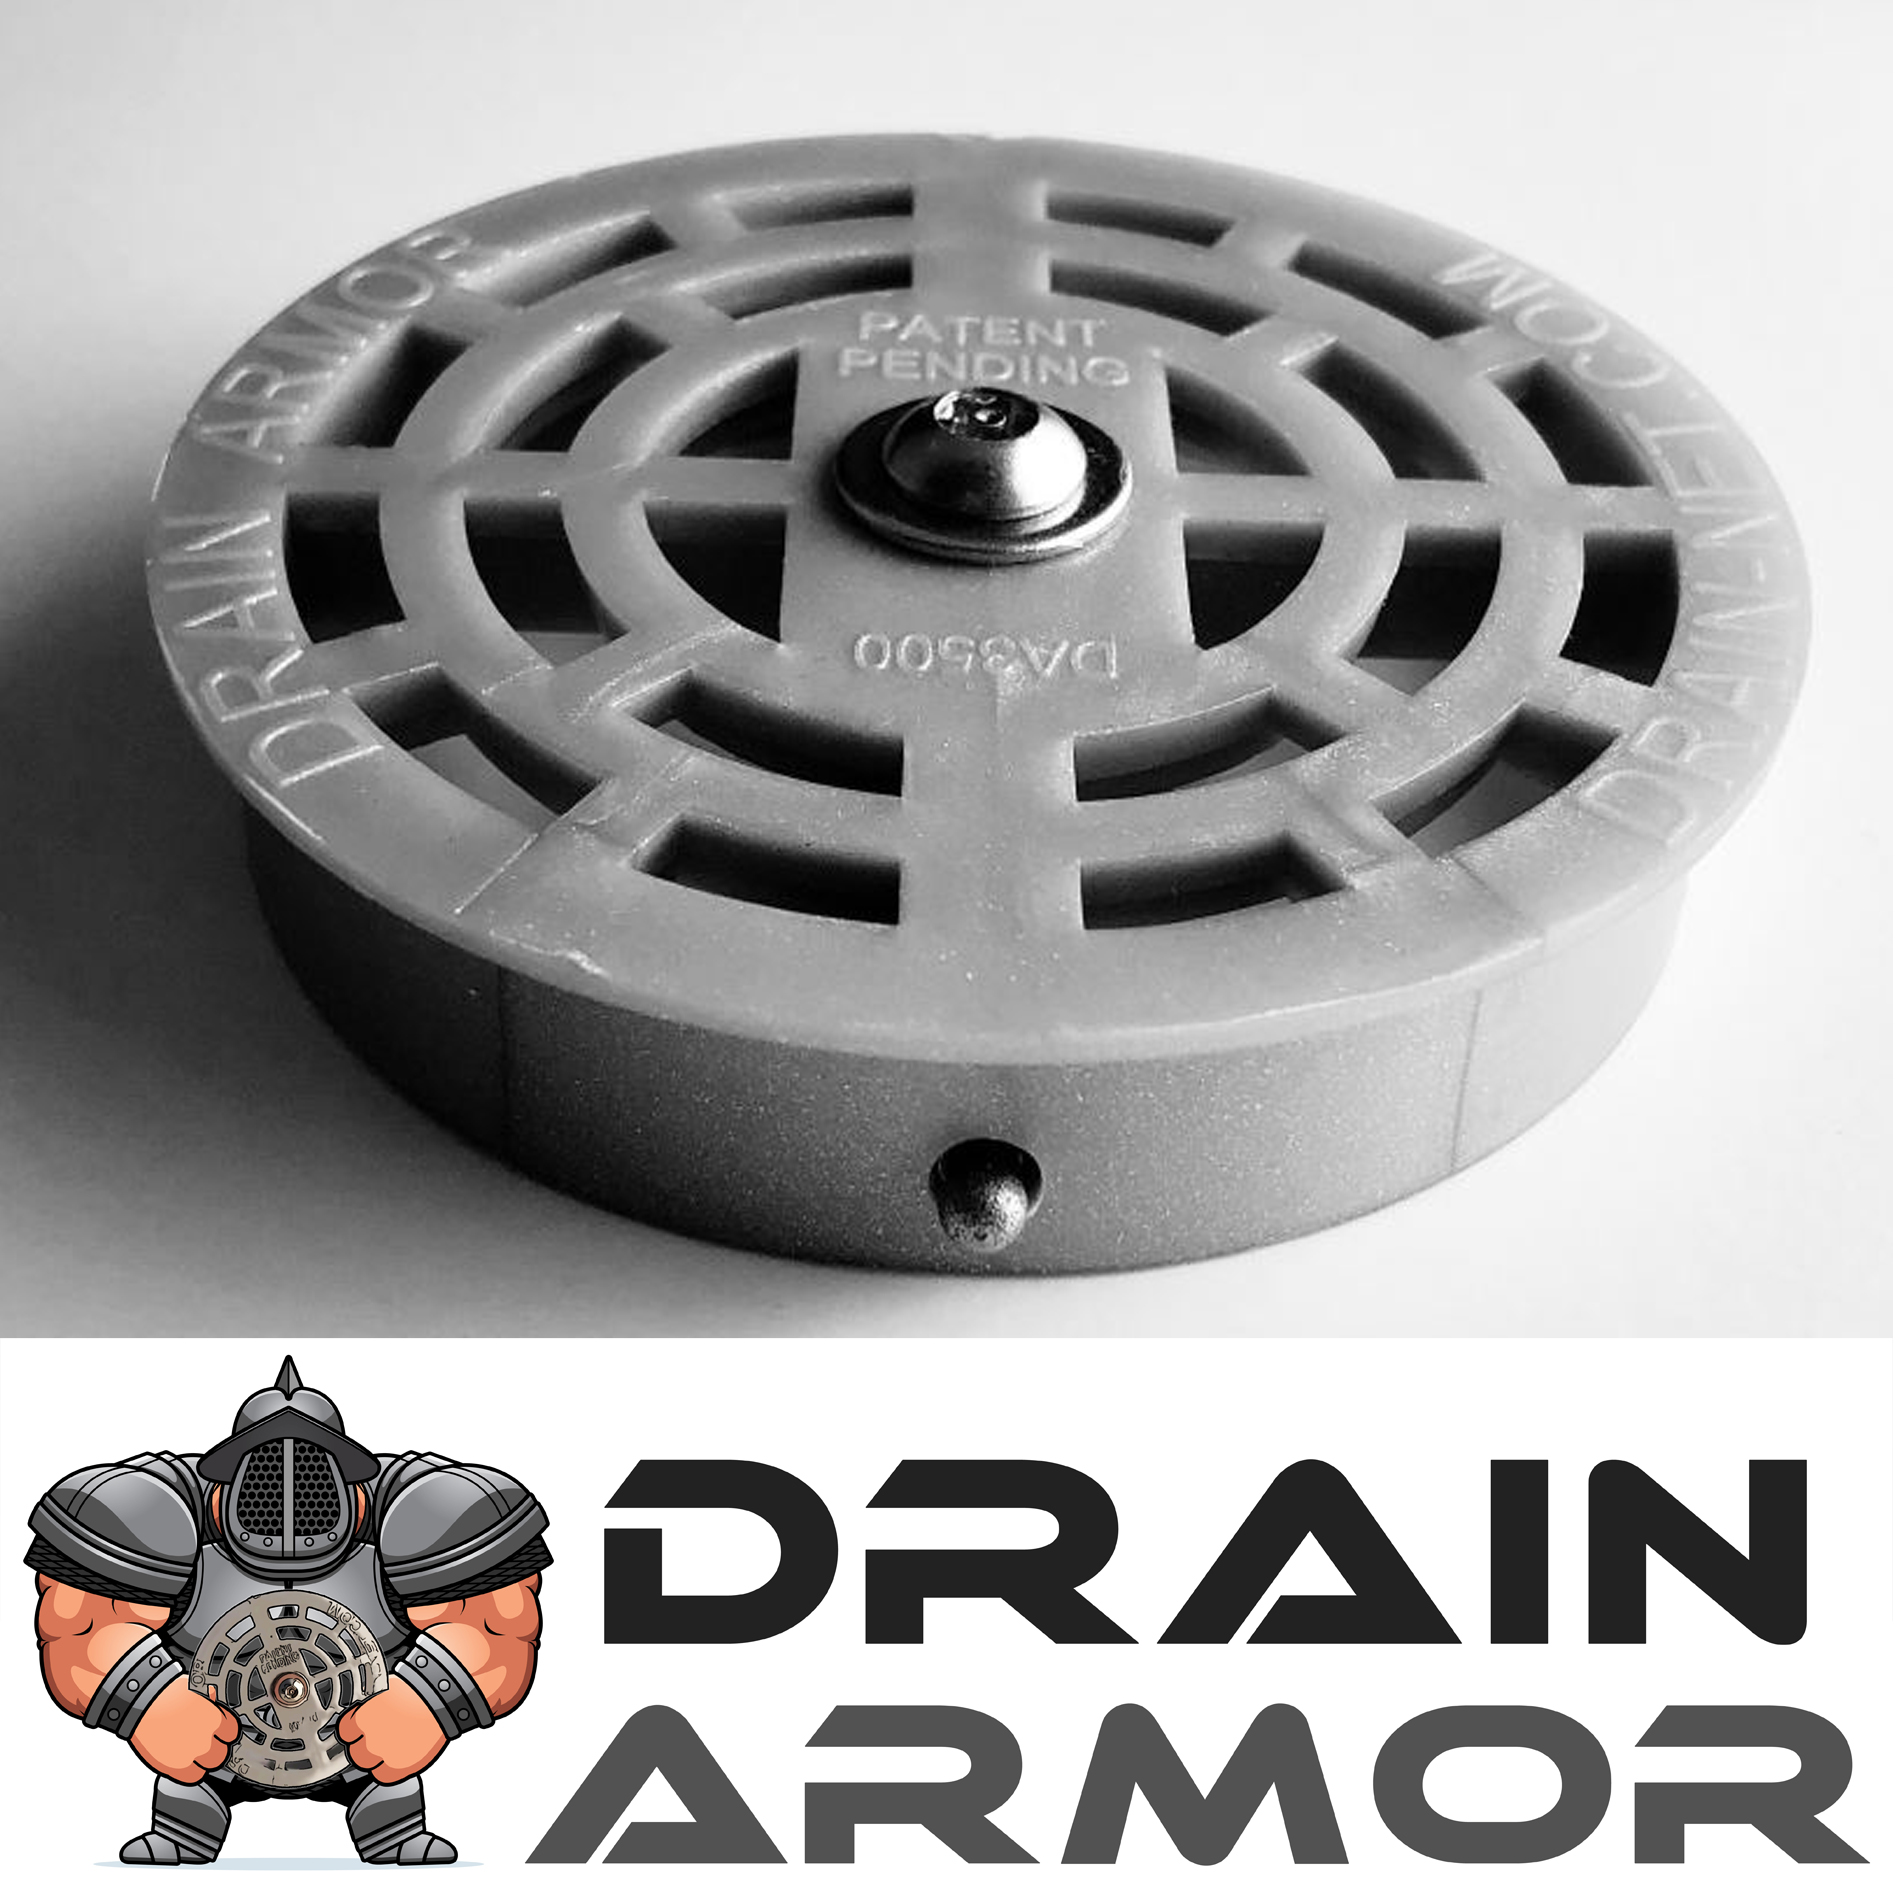 https://drain-net.com/media/com_hikashop/upload/drain_armor_product_picture.jpg